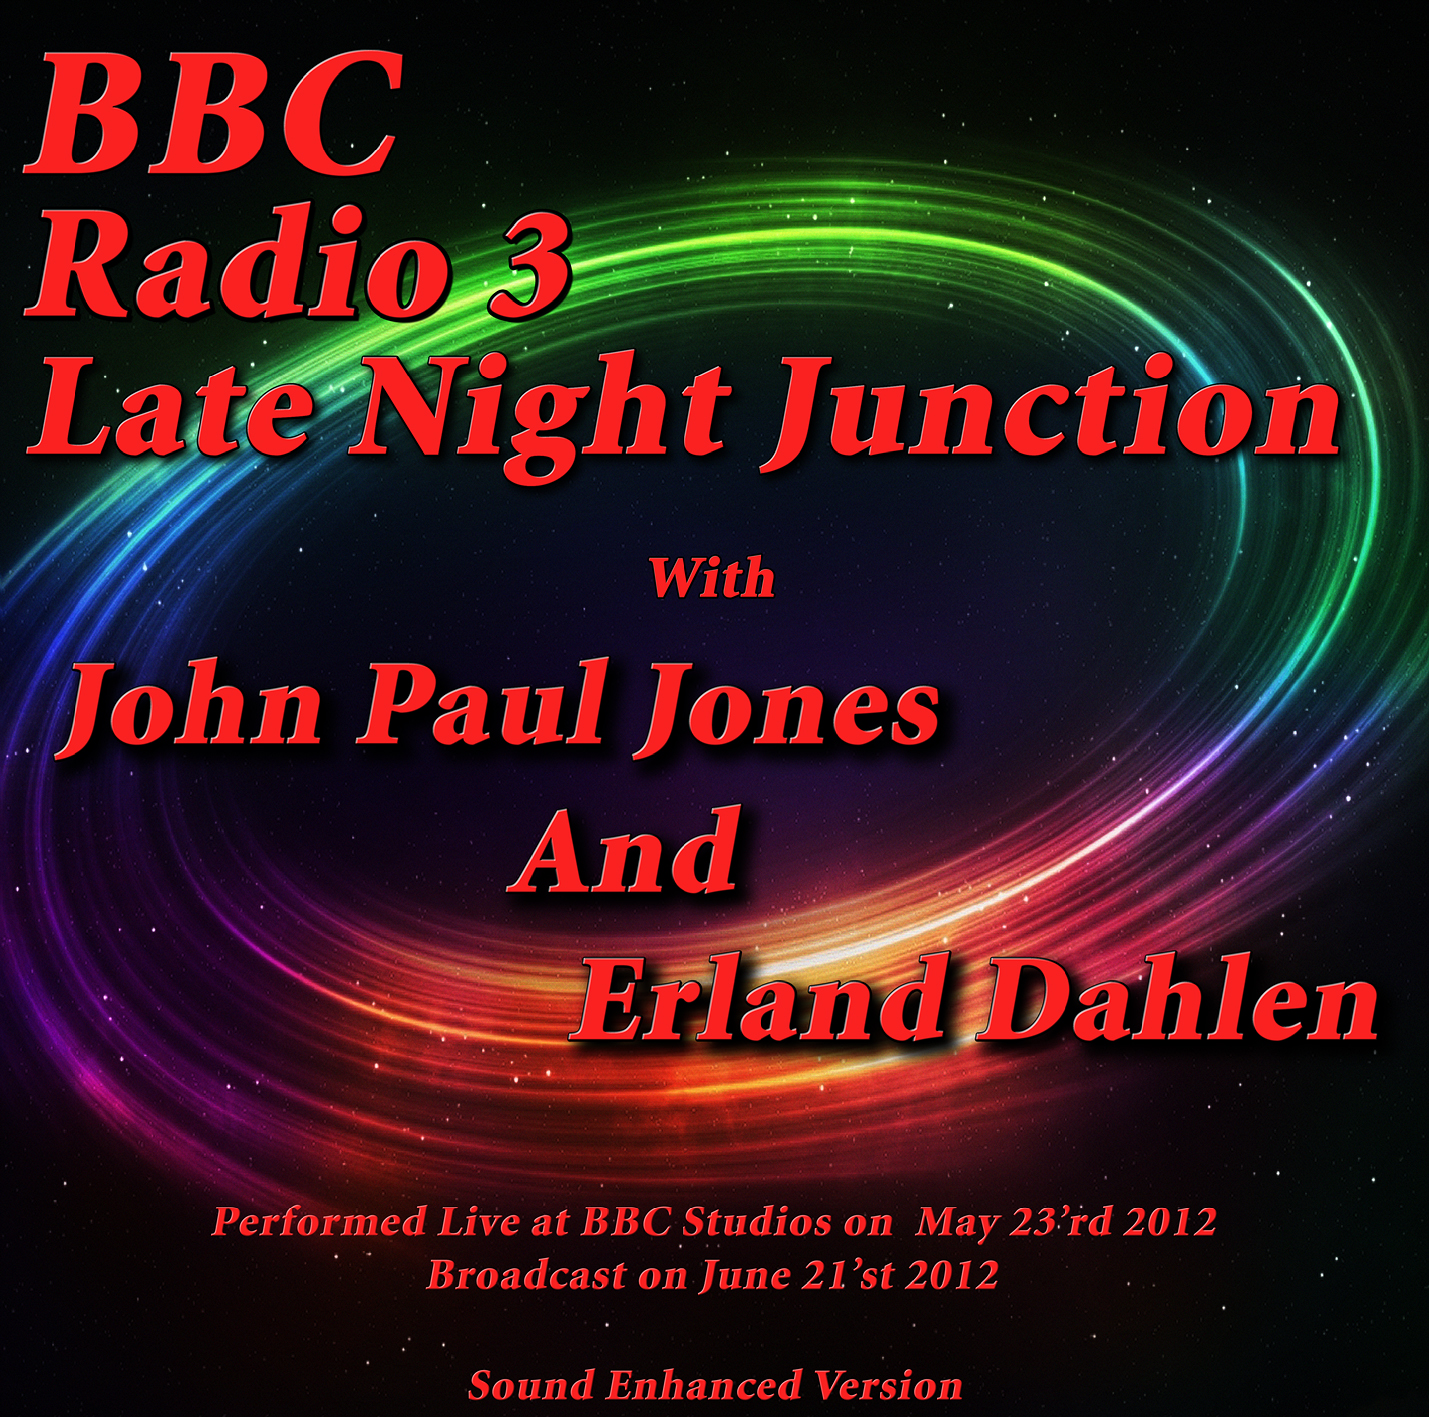 JohnPaulJonesErlandDahlen2012-05-23BBCRadio3LateNightJunctionLondonUK (2).jpg